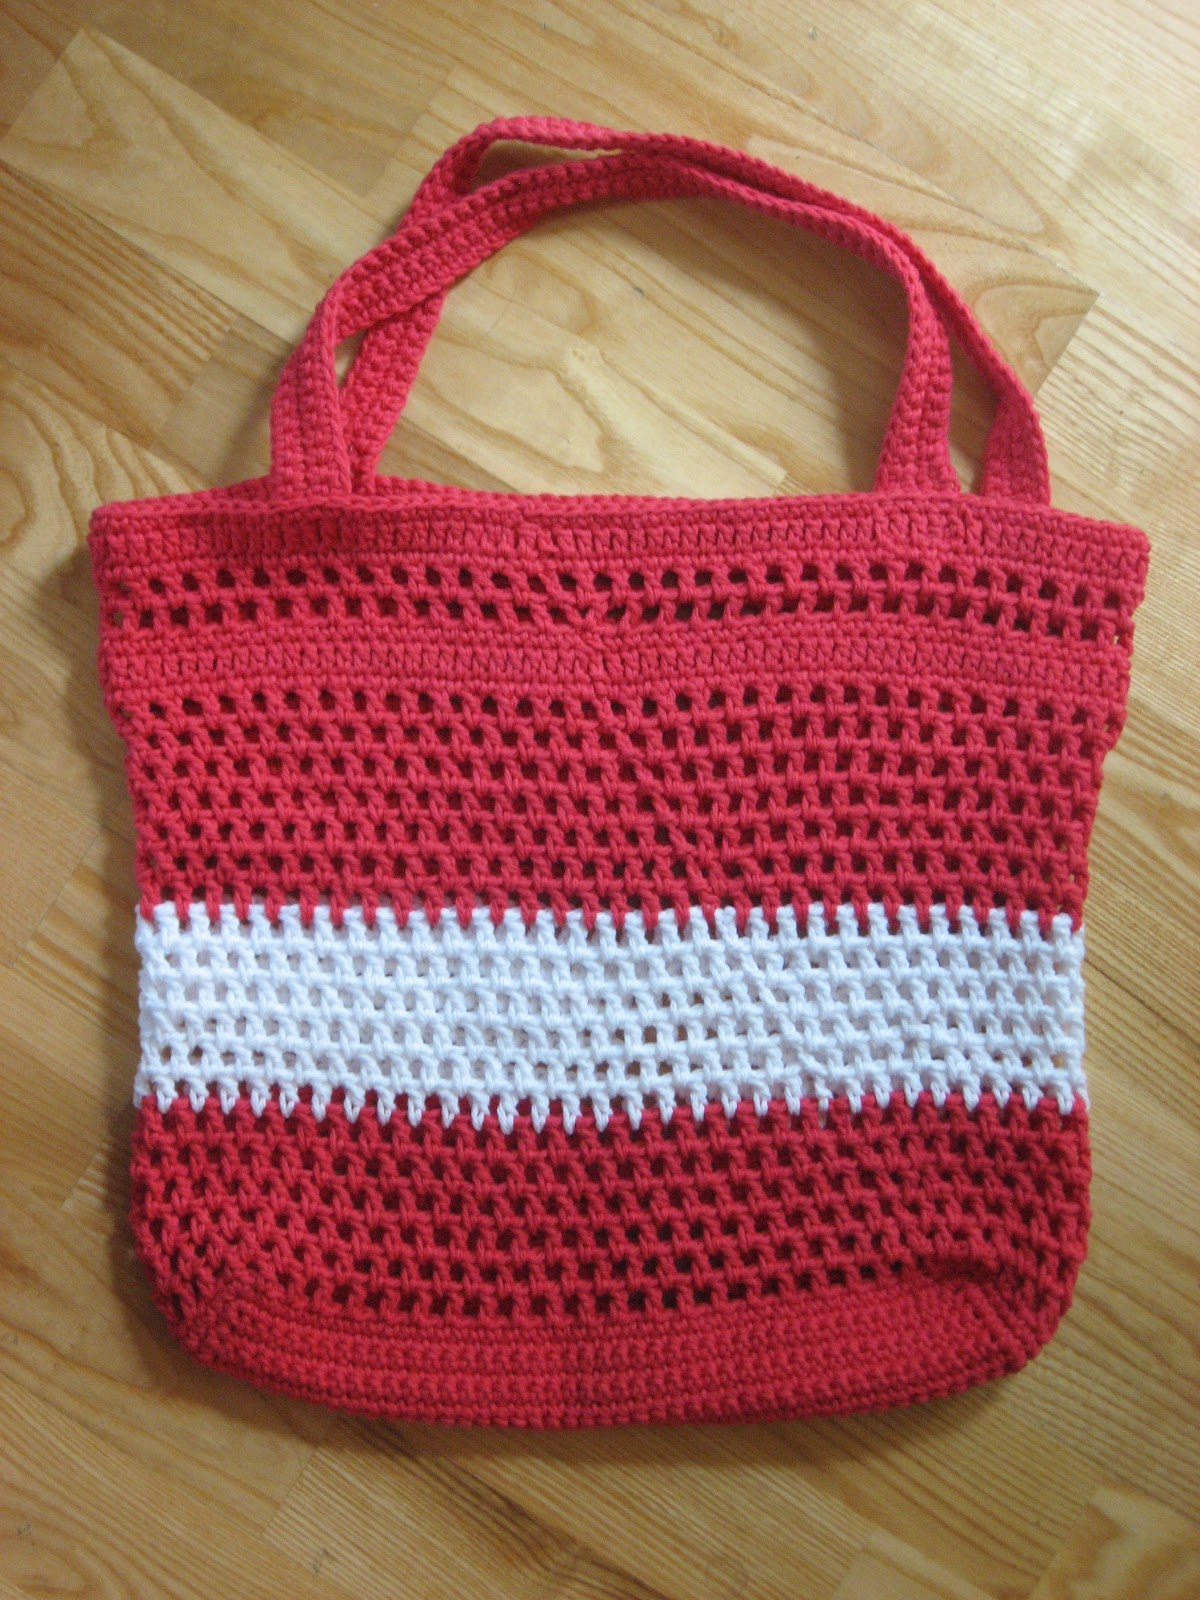 Crochet Projects: Market Bags Part 2